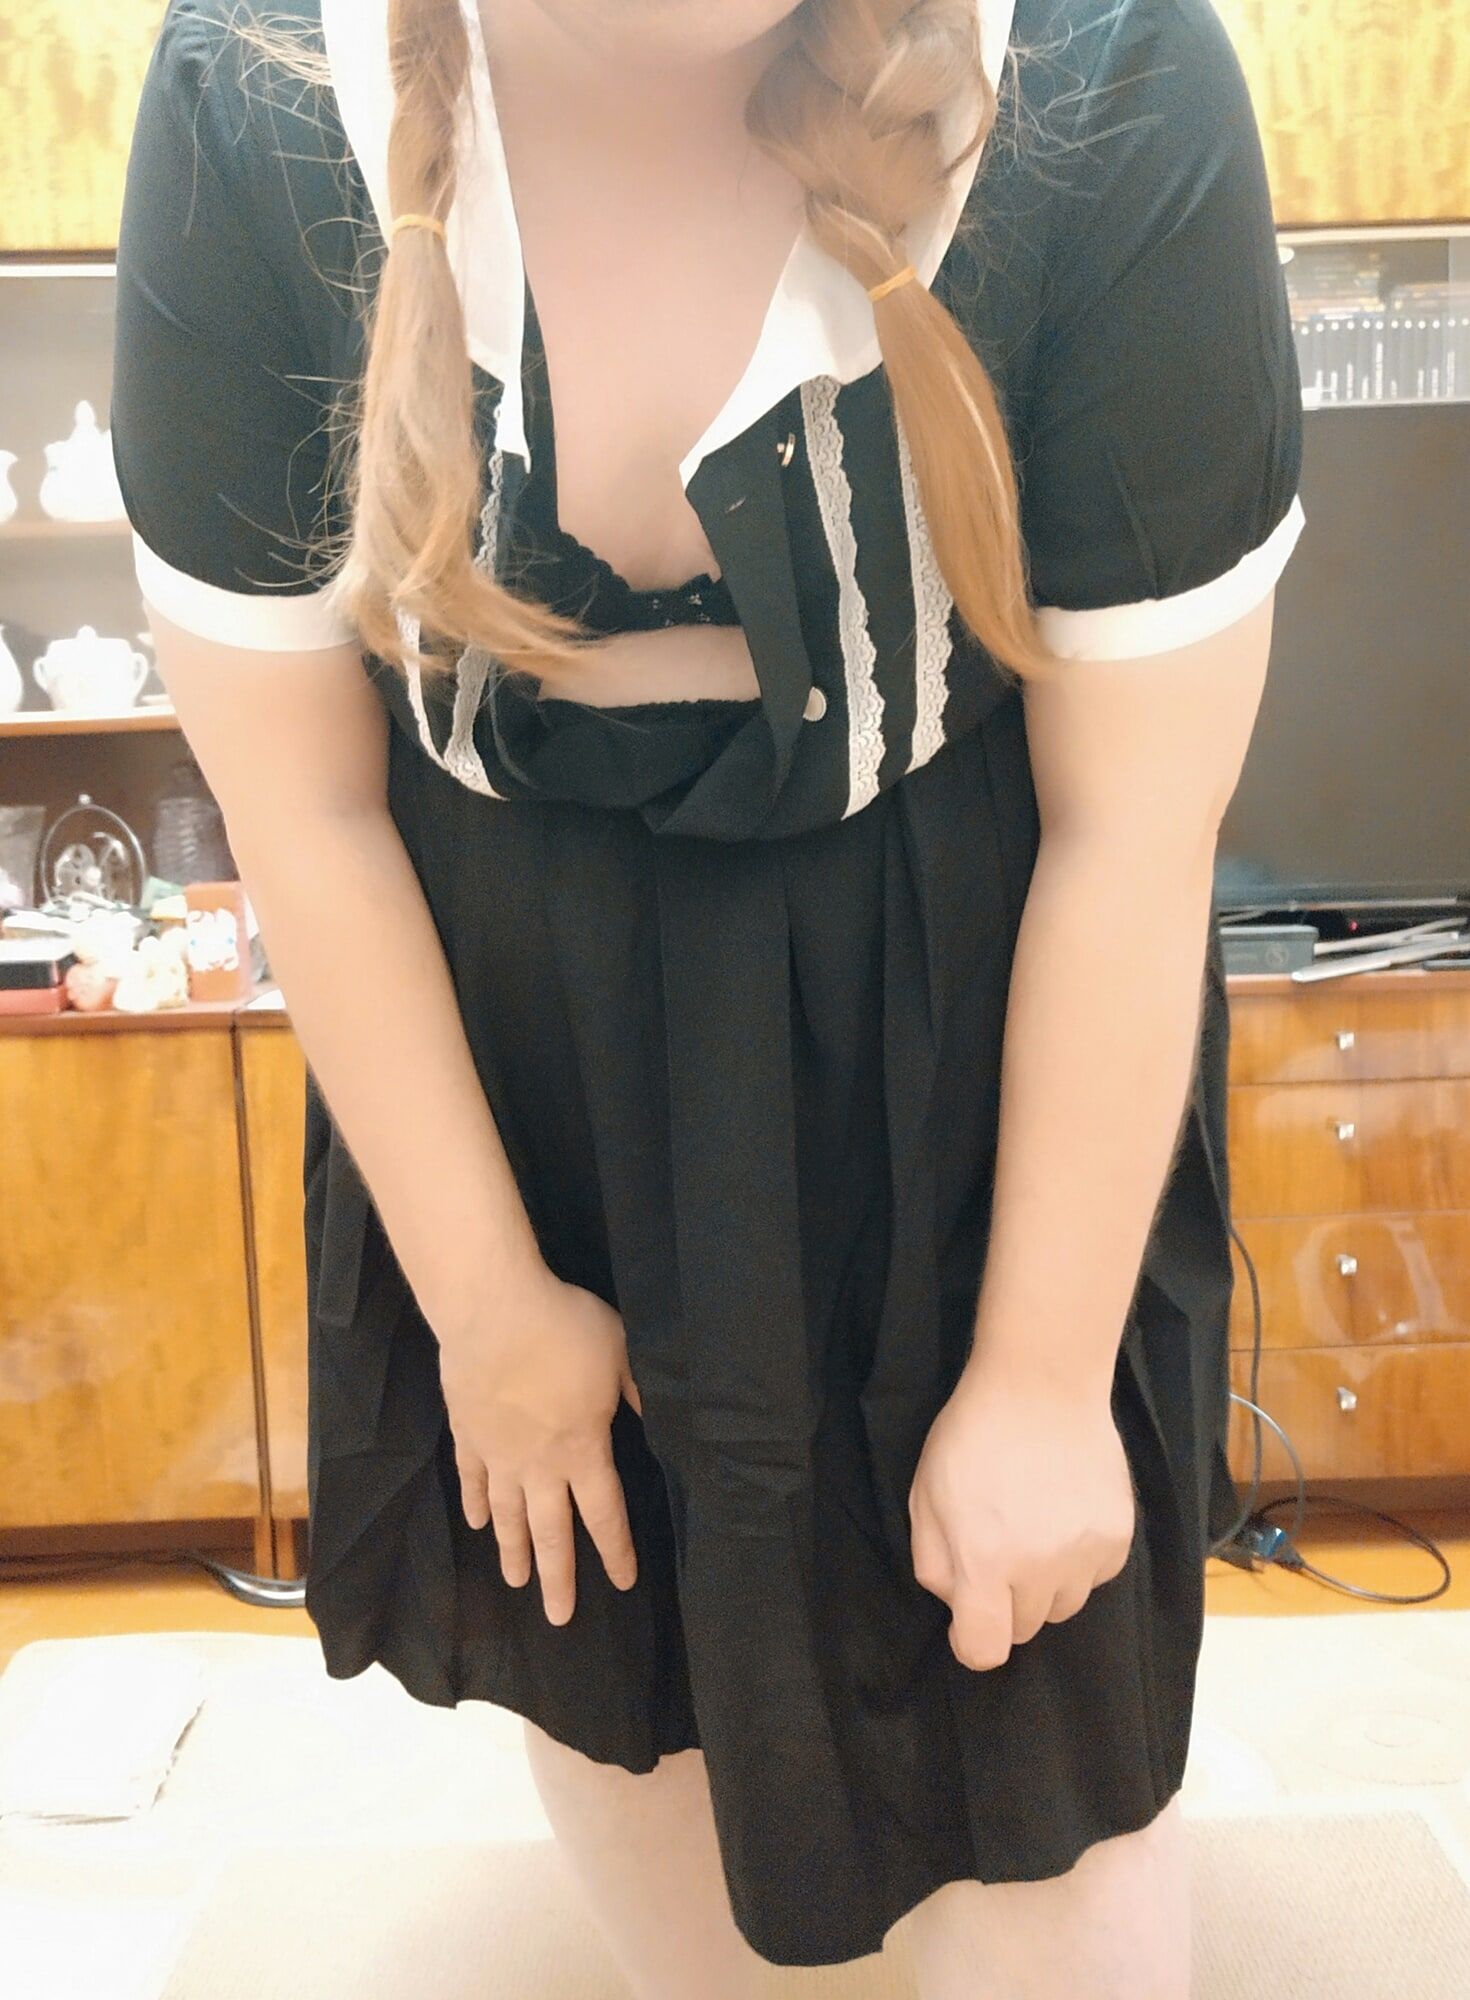 sissy Aleksa posing in new black dress #15